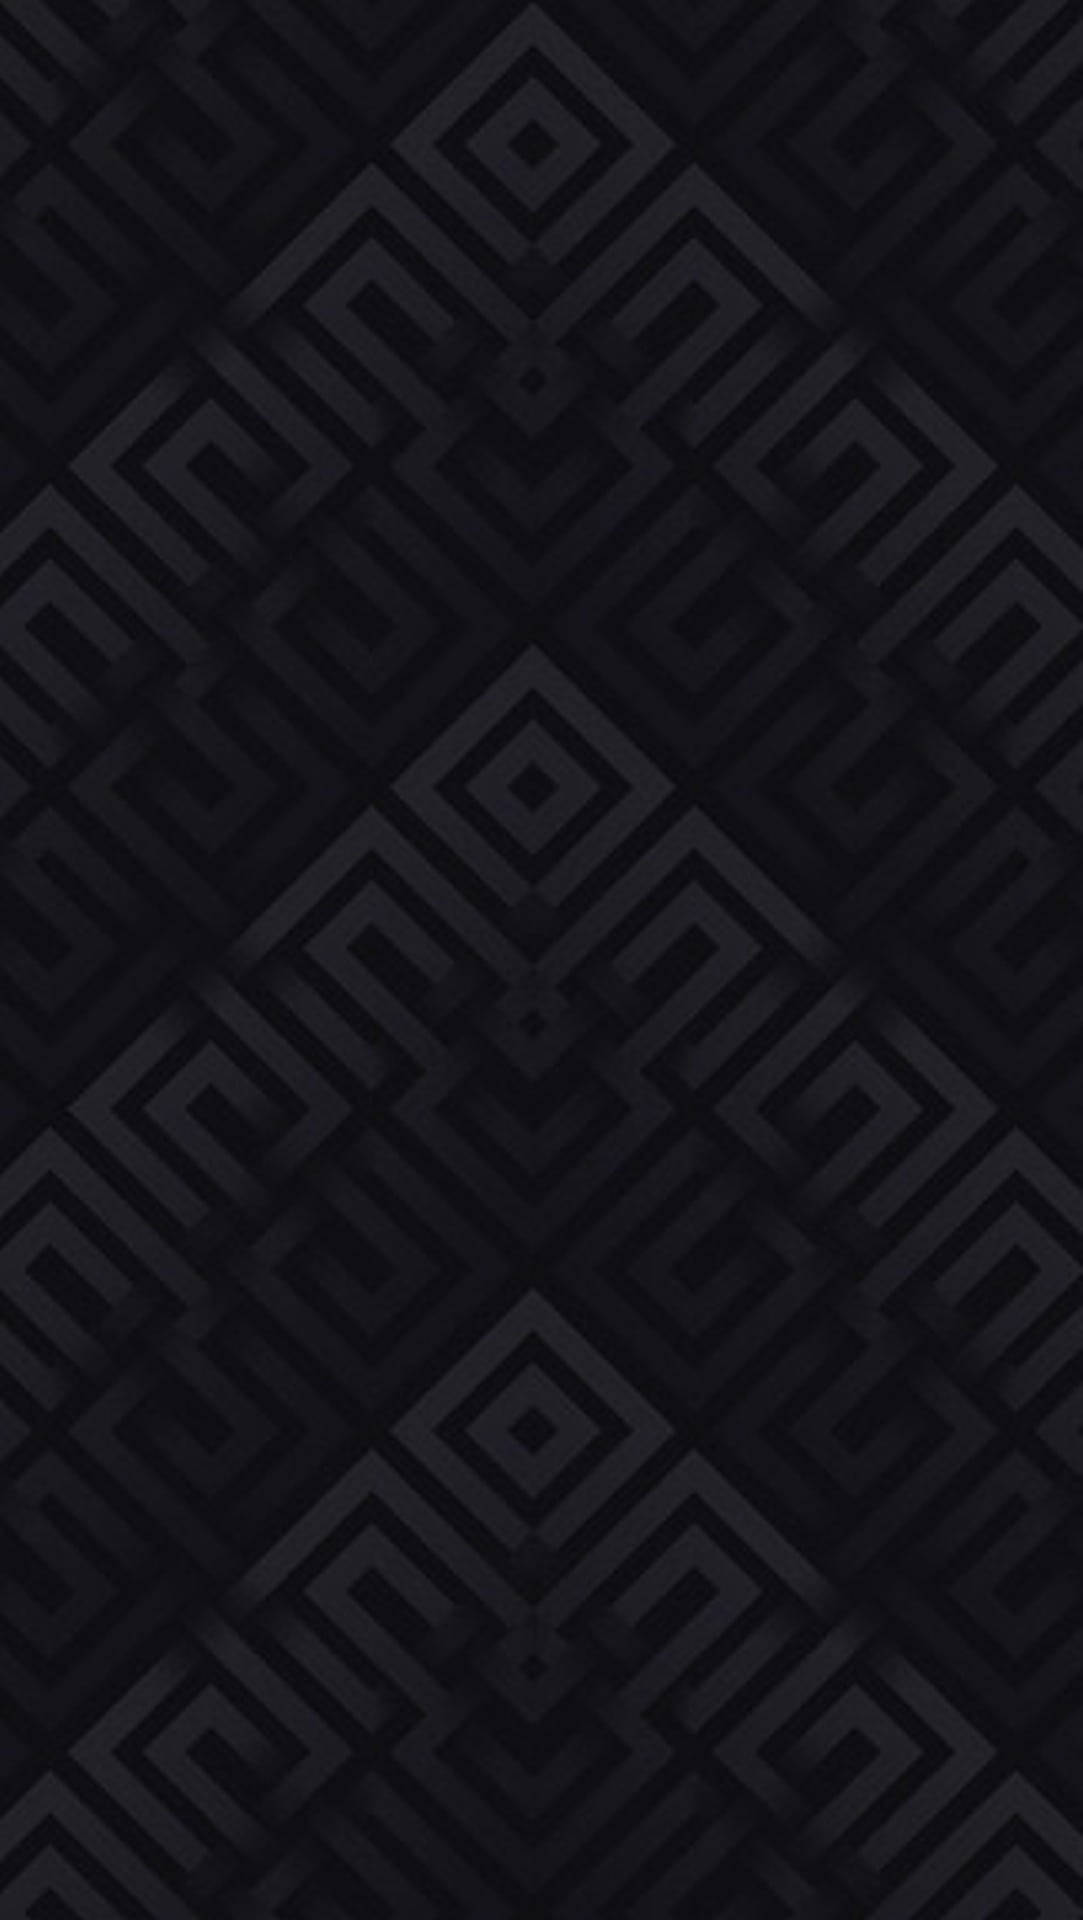 Abstract Chevron Sayagata Black Pattern Wallpaper